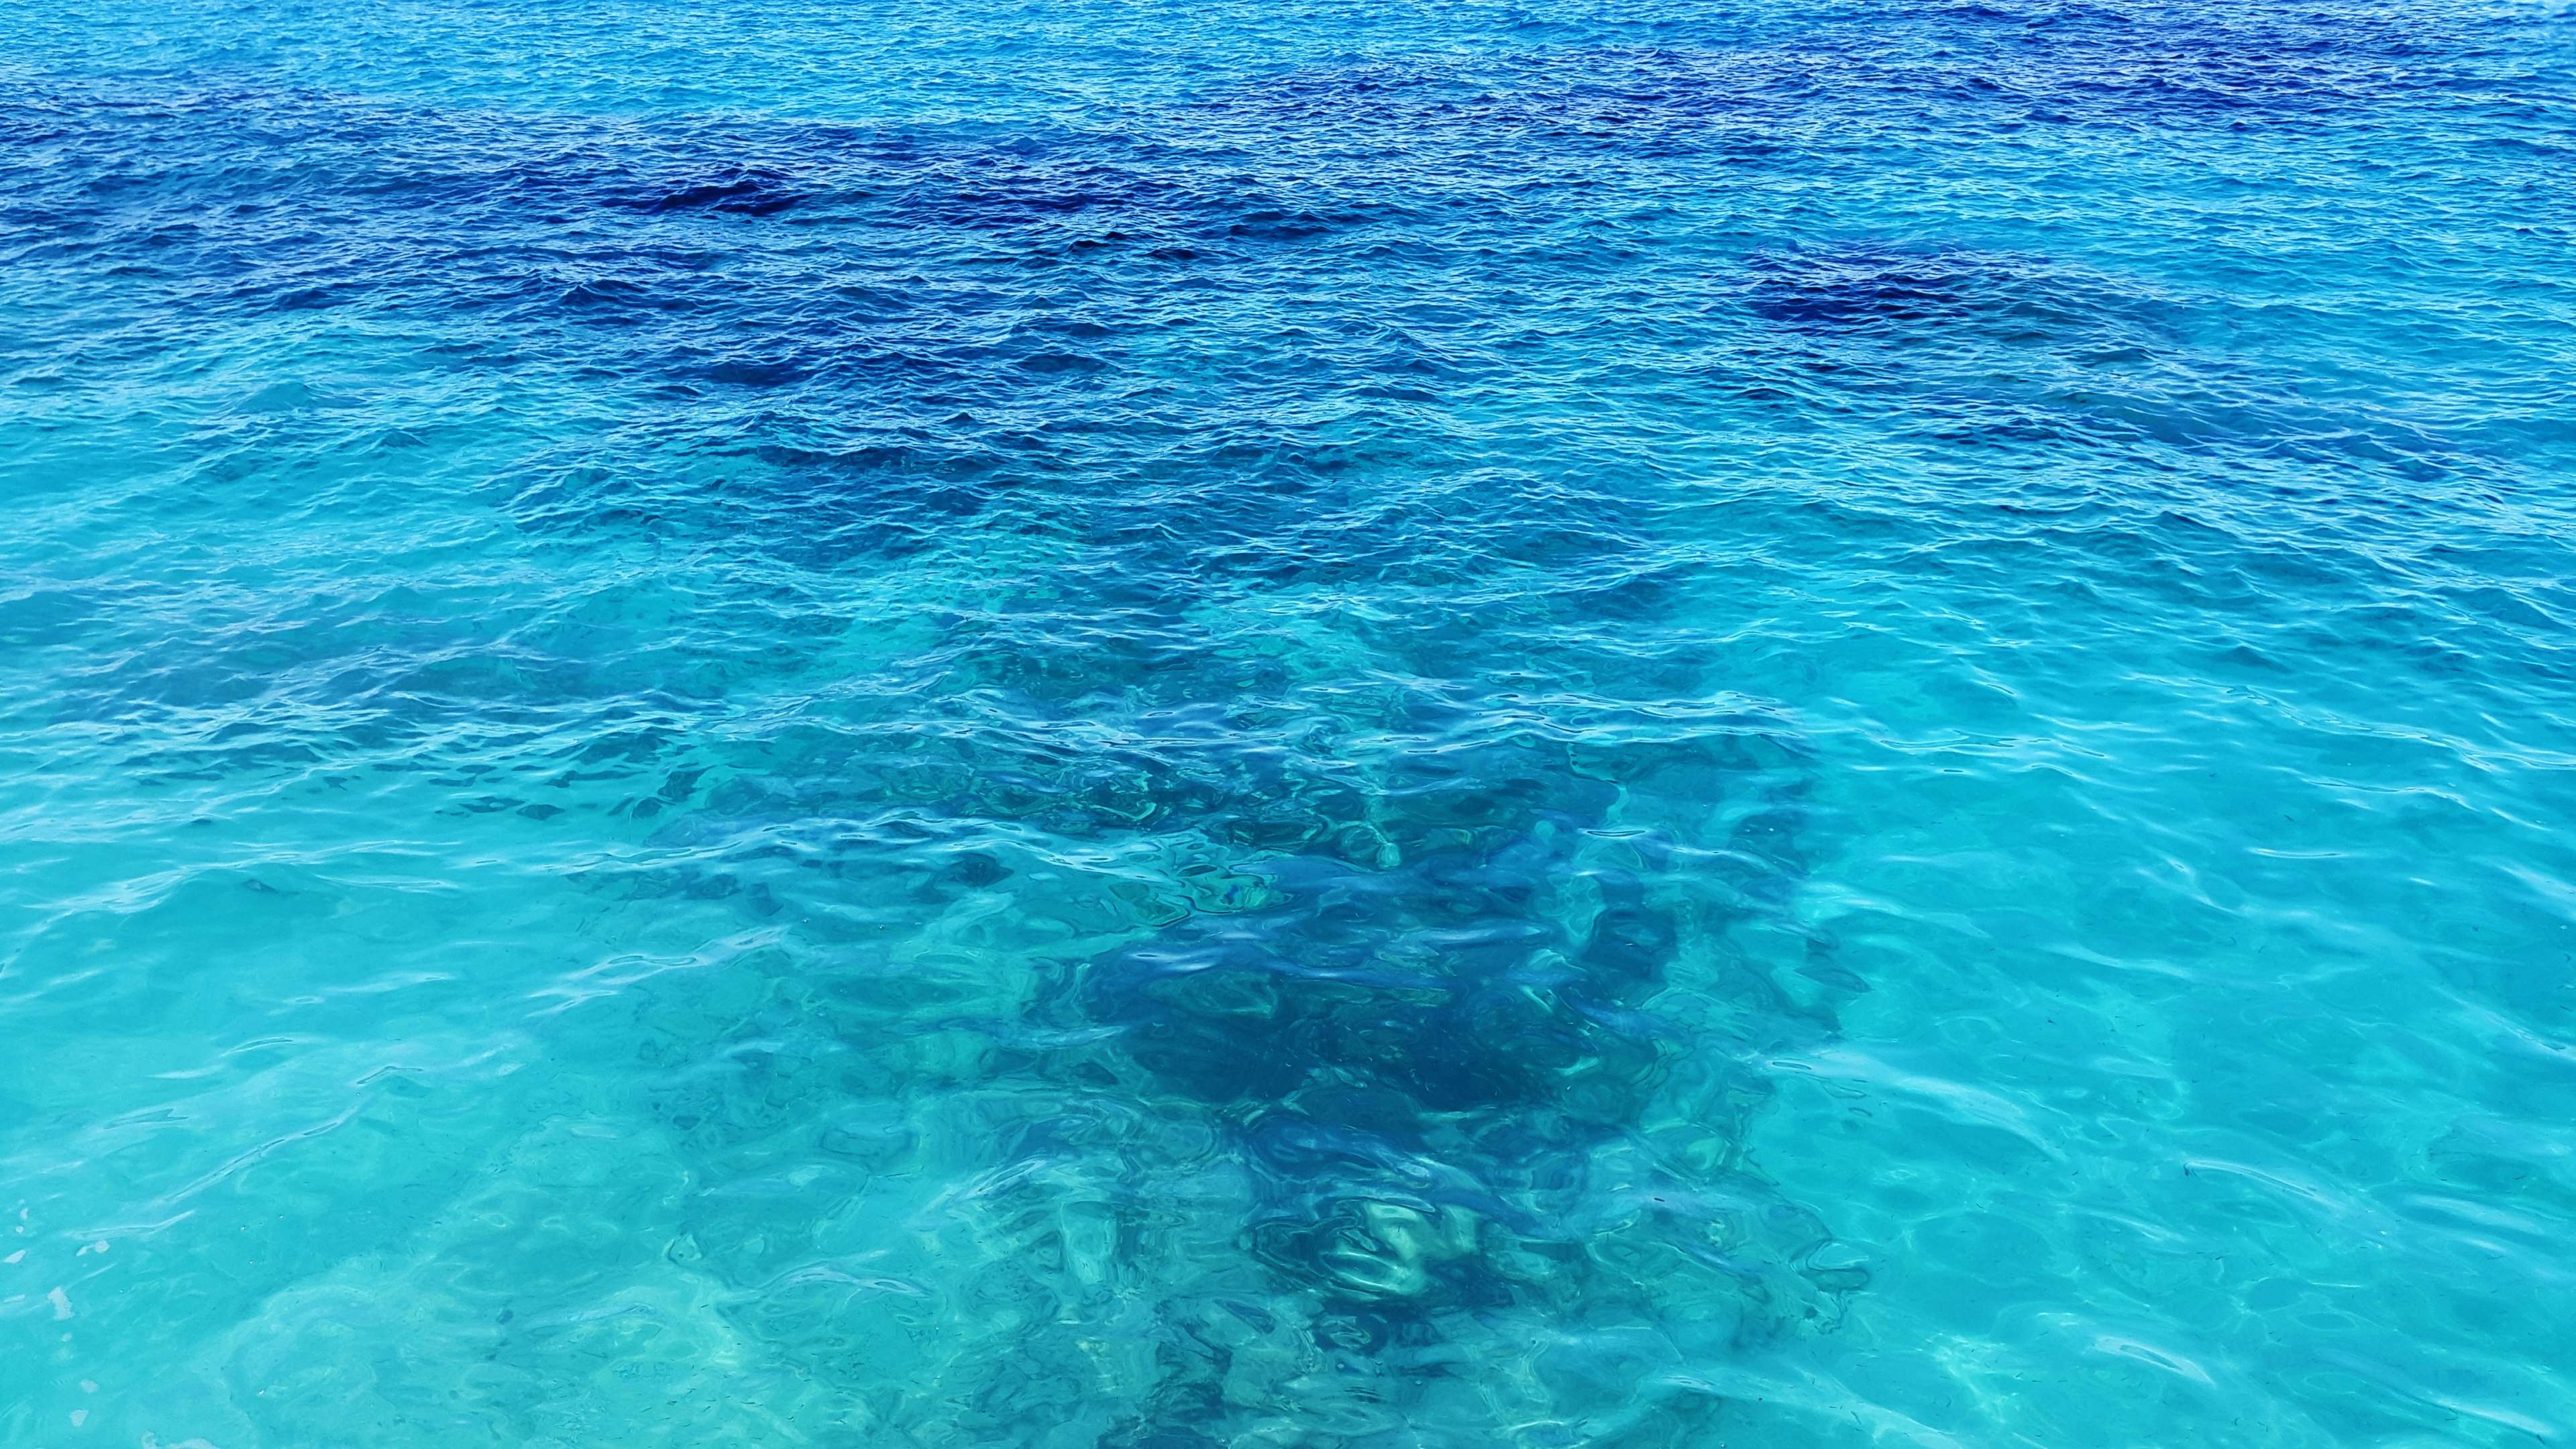 3840x2160 background, blue, caribbean, clear, deep, diving, mediterranean, ocean, sea, turquoise, water, wave 4k wallpaper JPG 959 kB